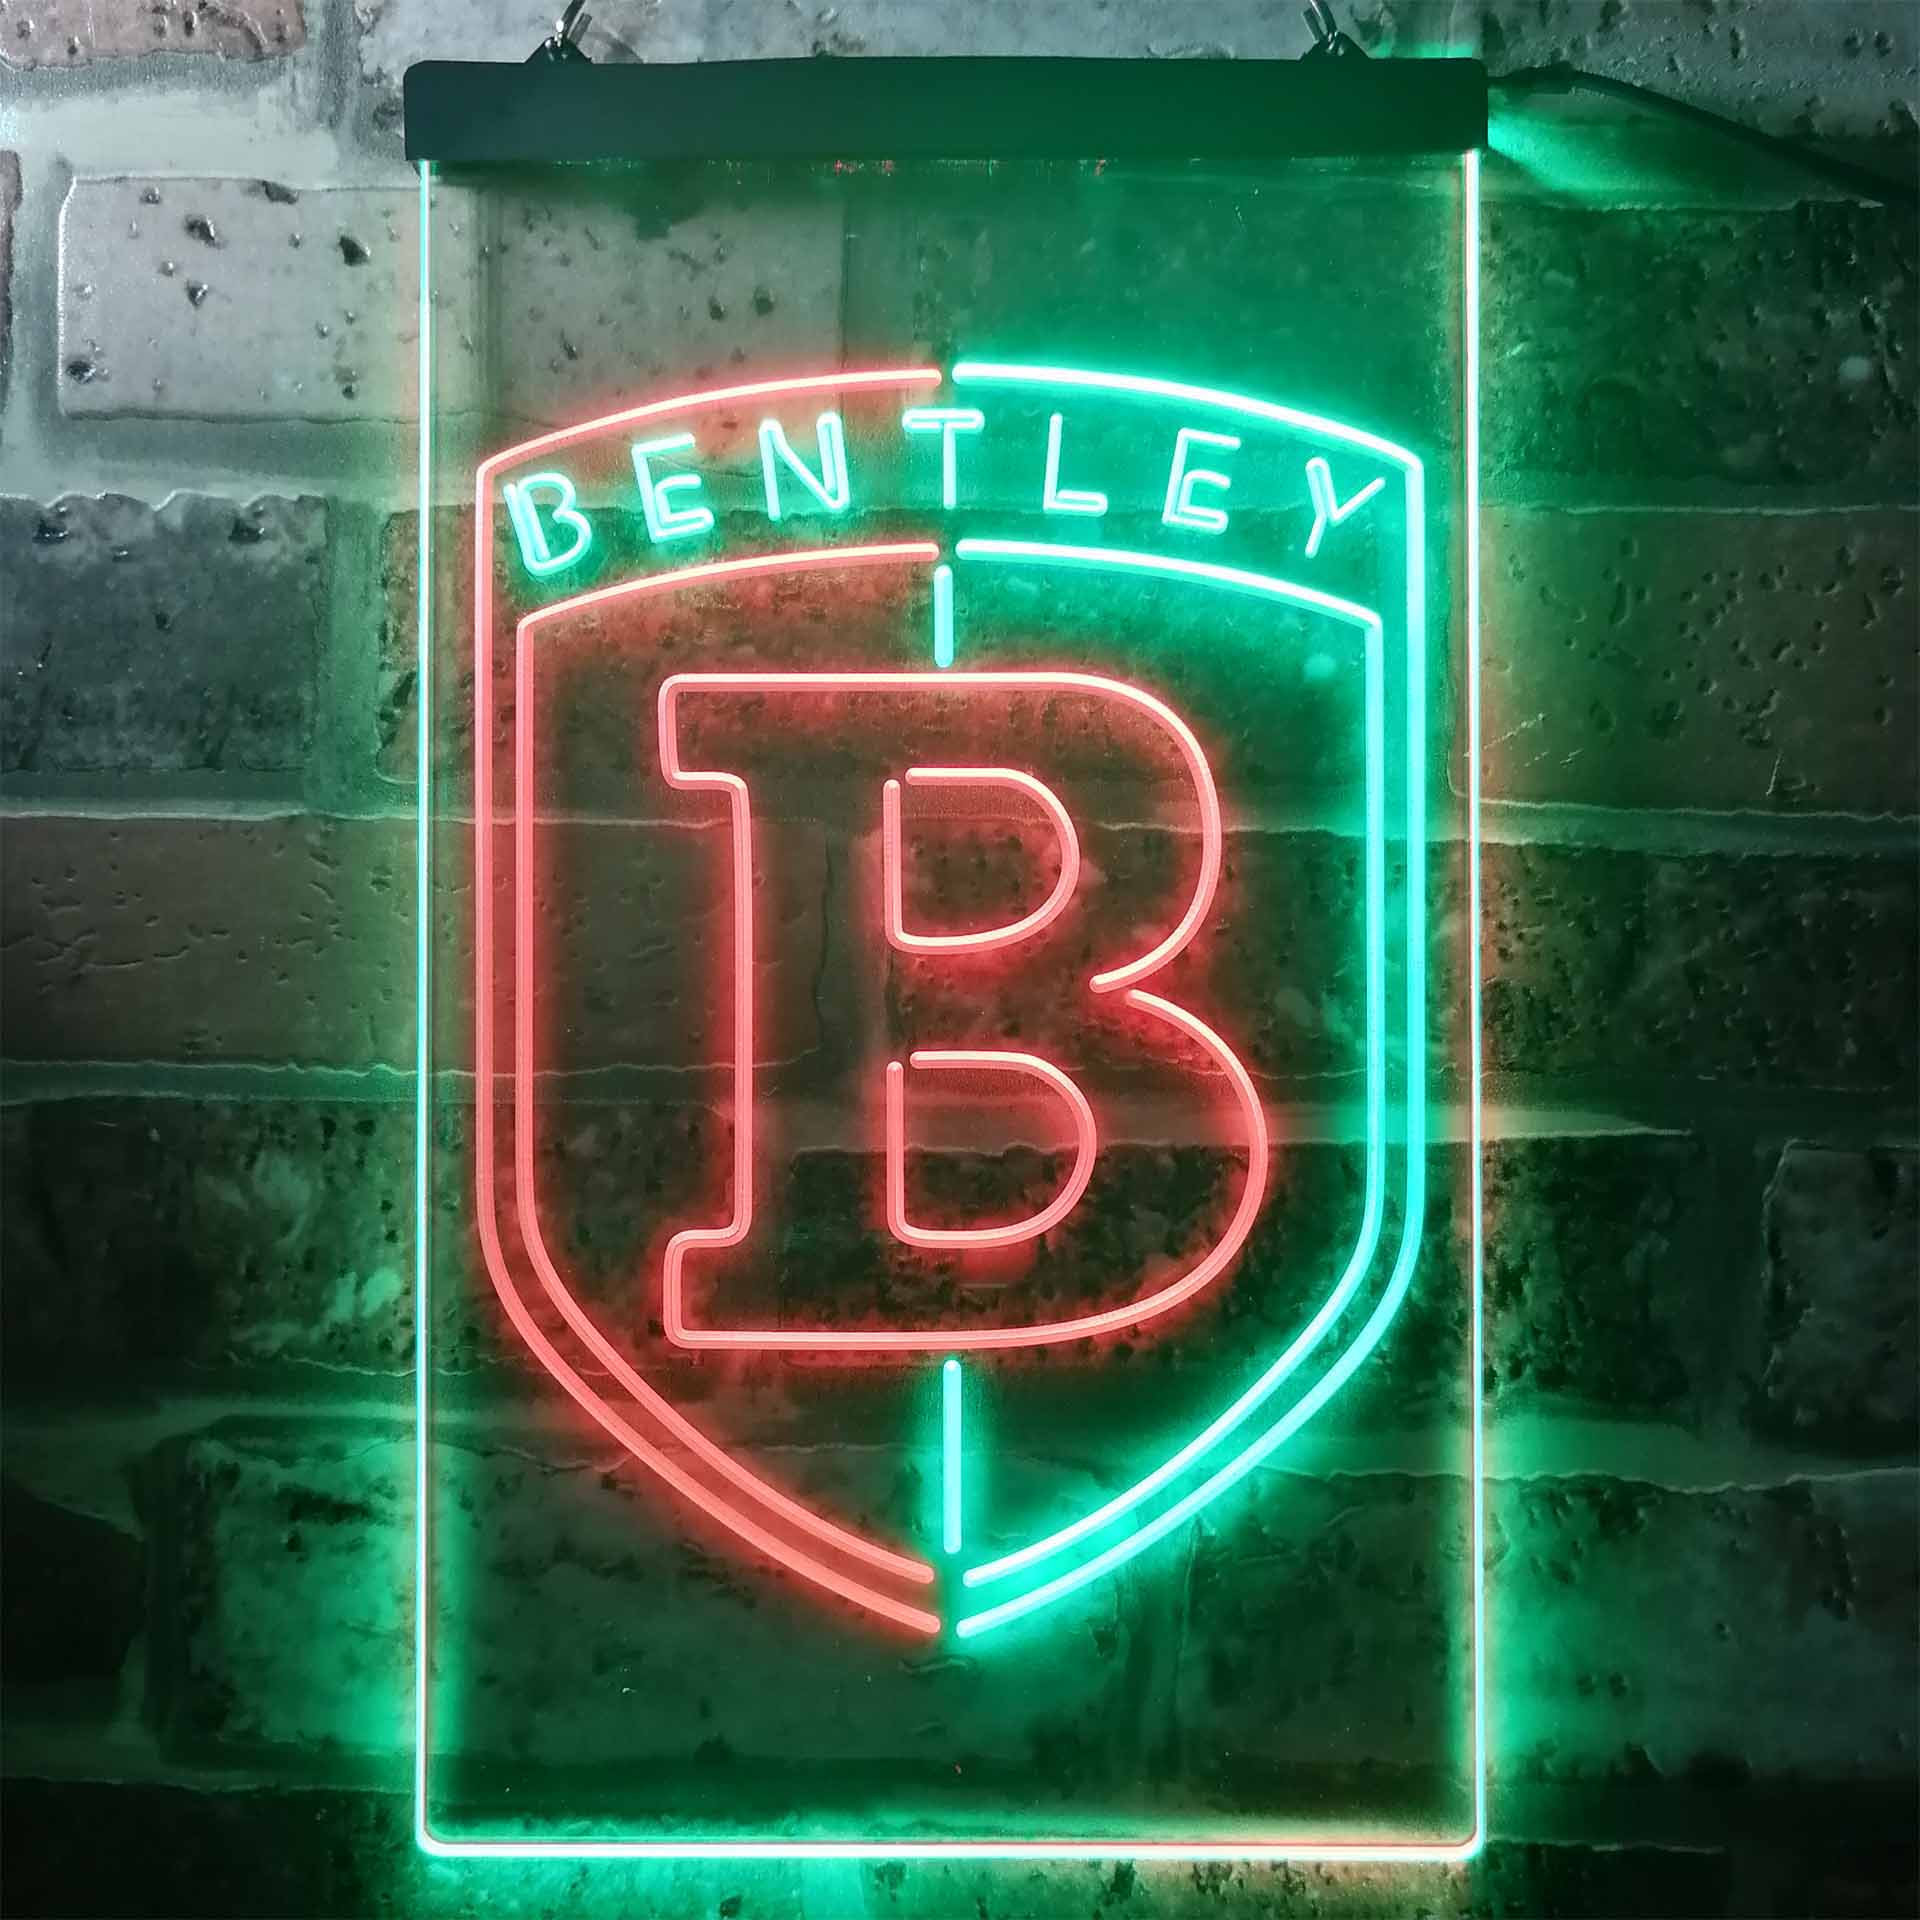 Bentley Car Neon-Like LED Sign - ProLedSign